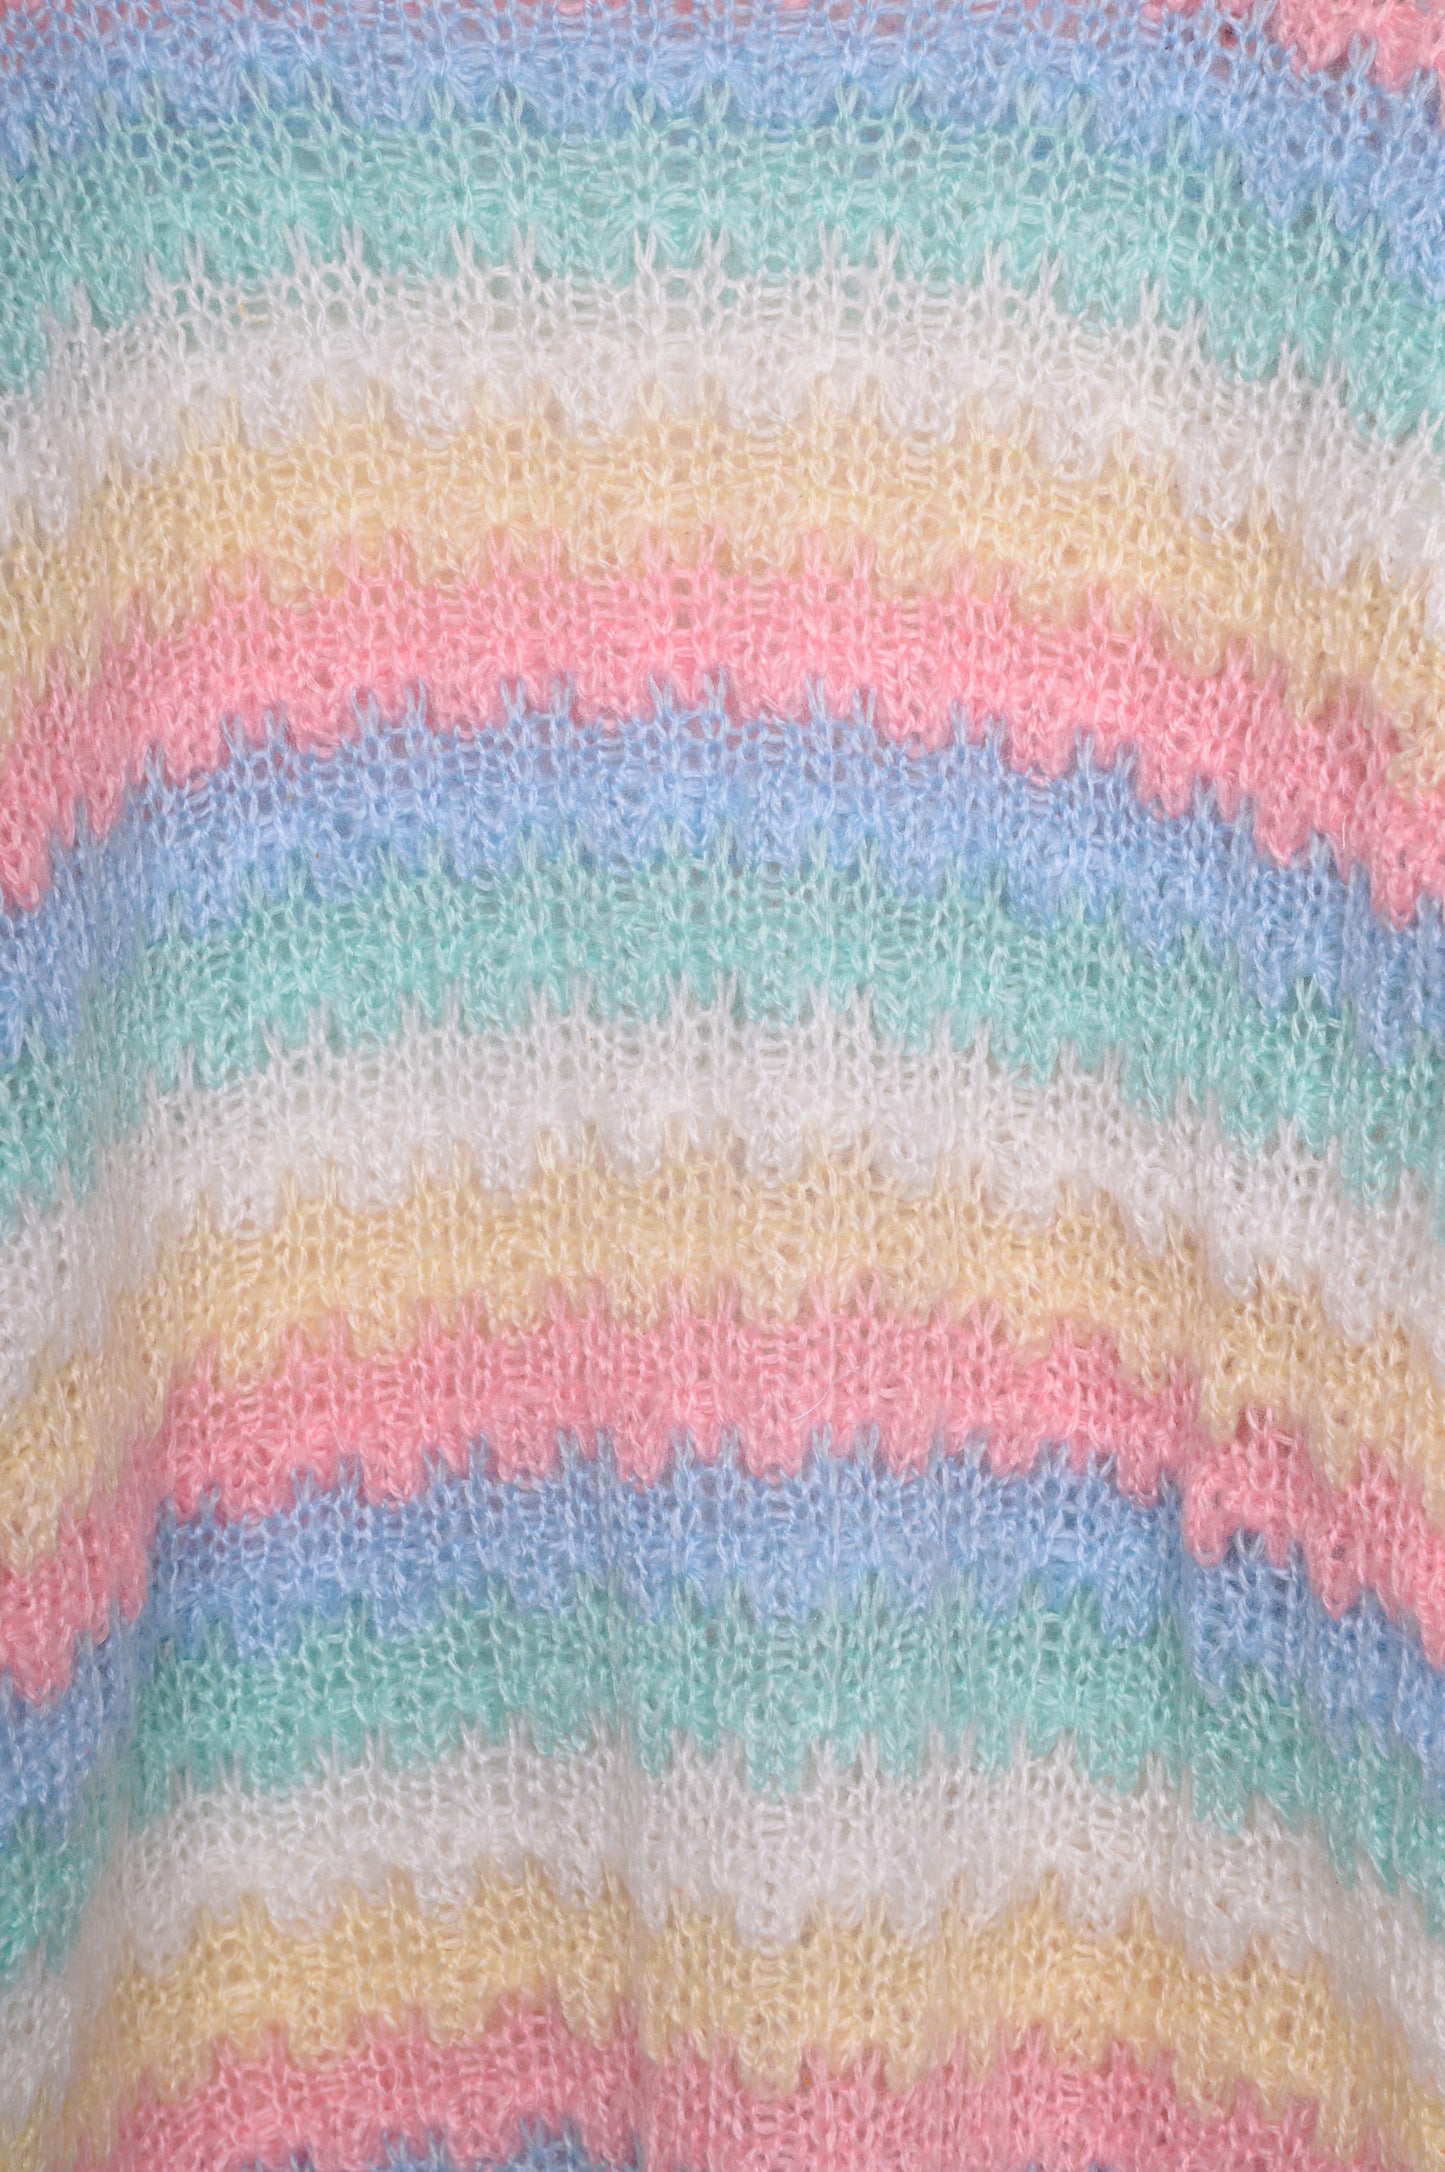 Handmade Pastel Rainbow Sweater